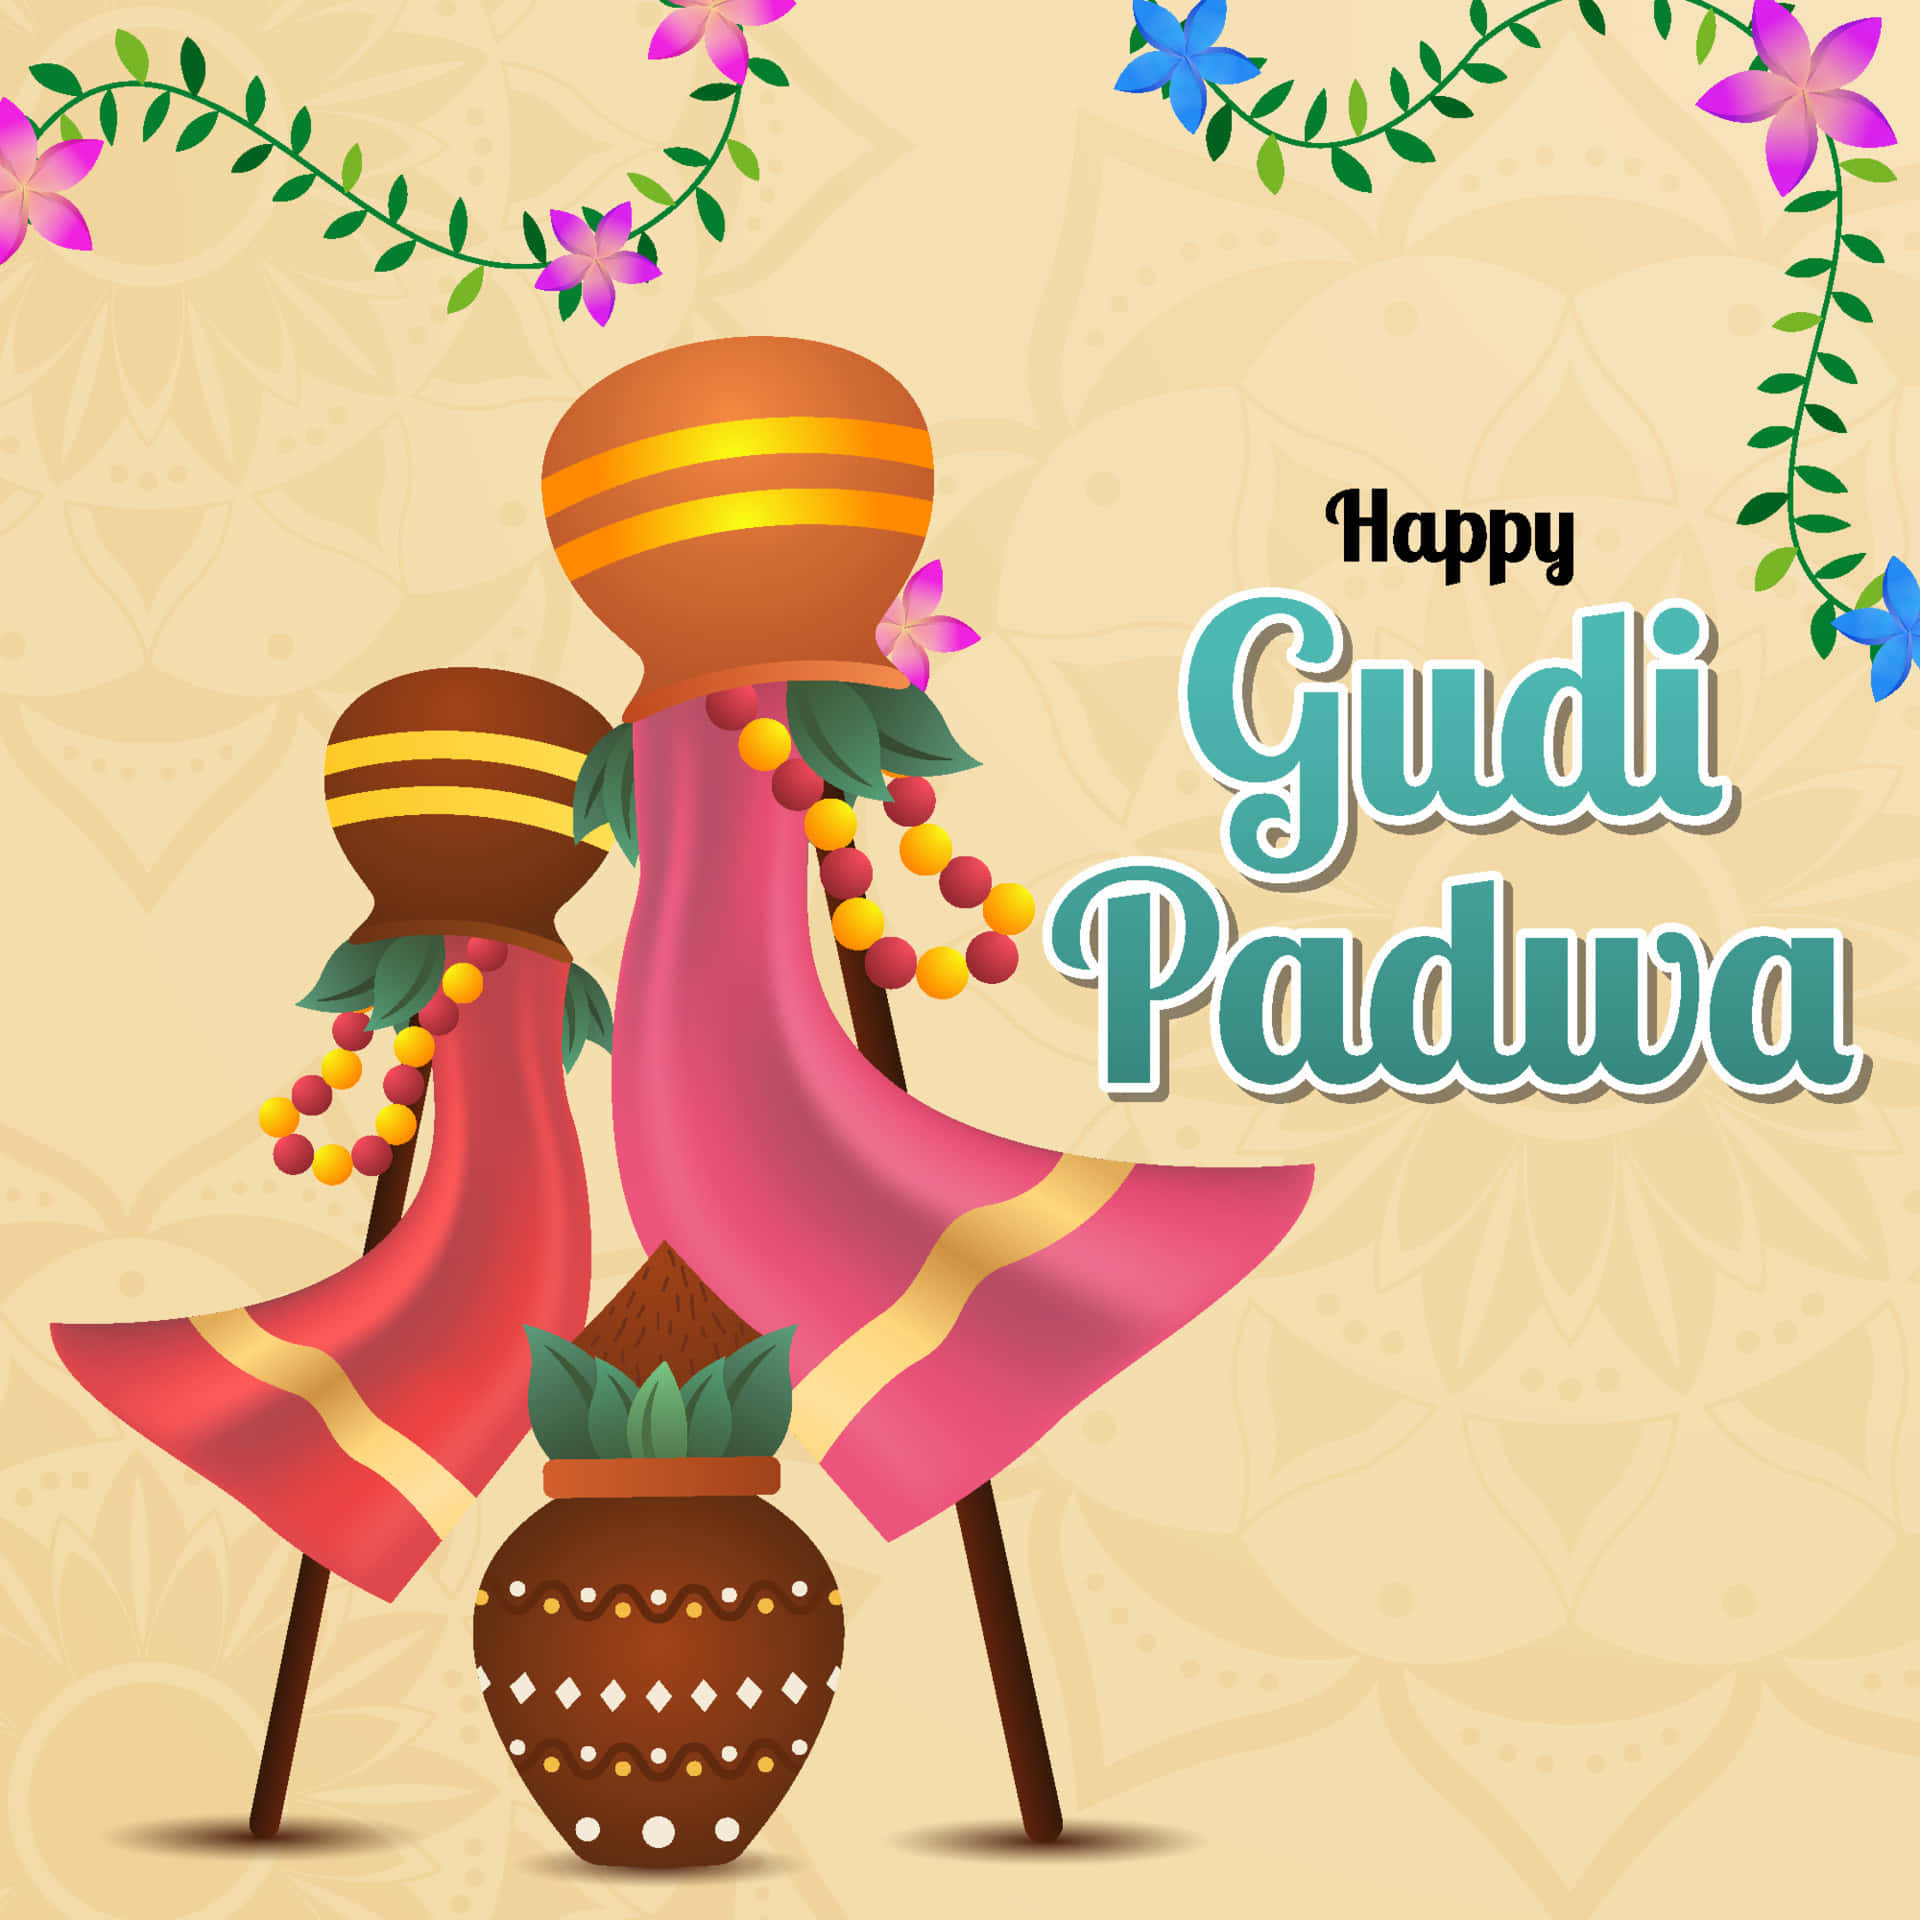 Happy Guddi Padwa Images, Hd Wallpapers, Hd Images, Hd Images, Hd Images,